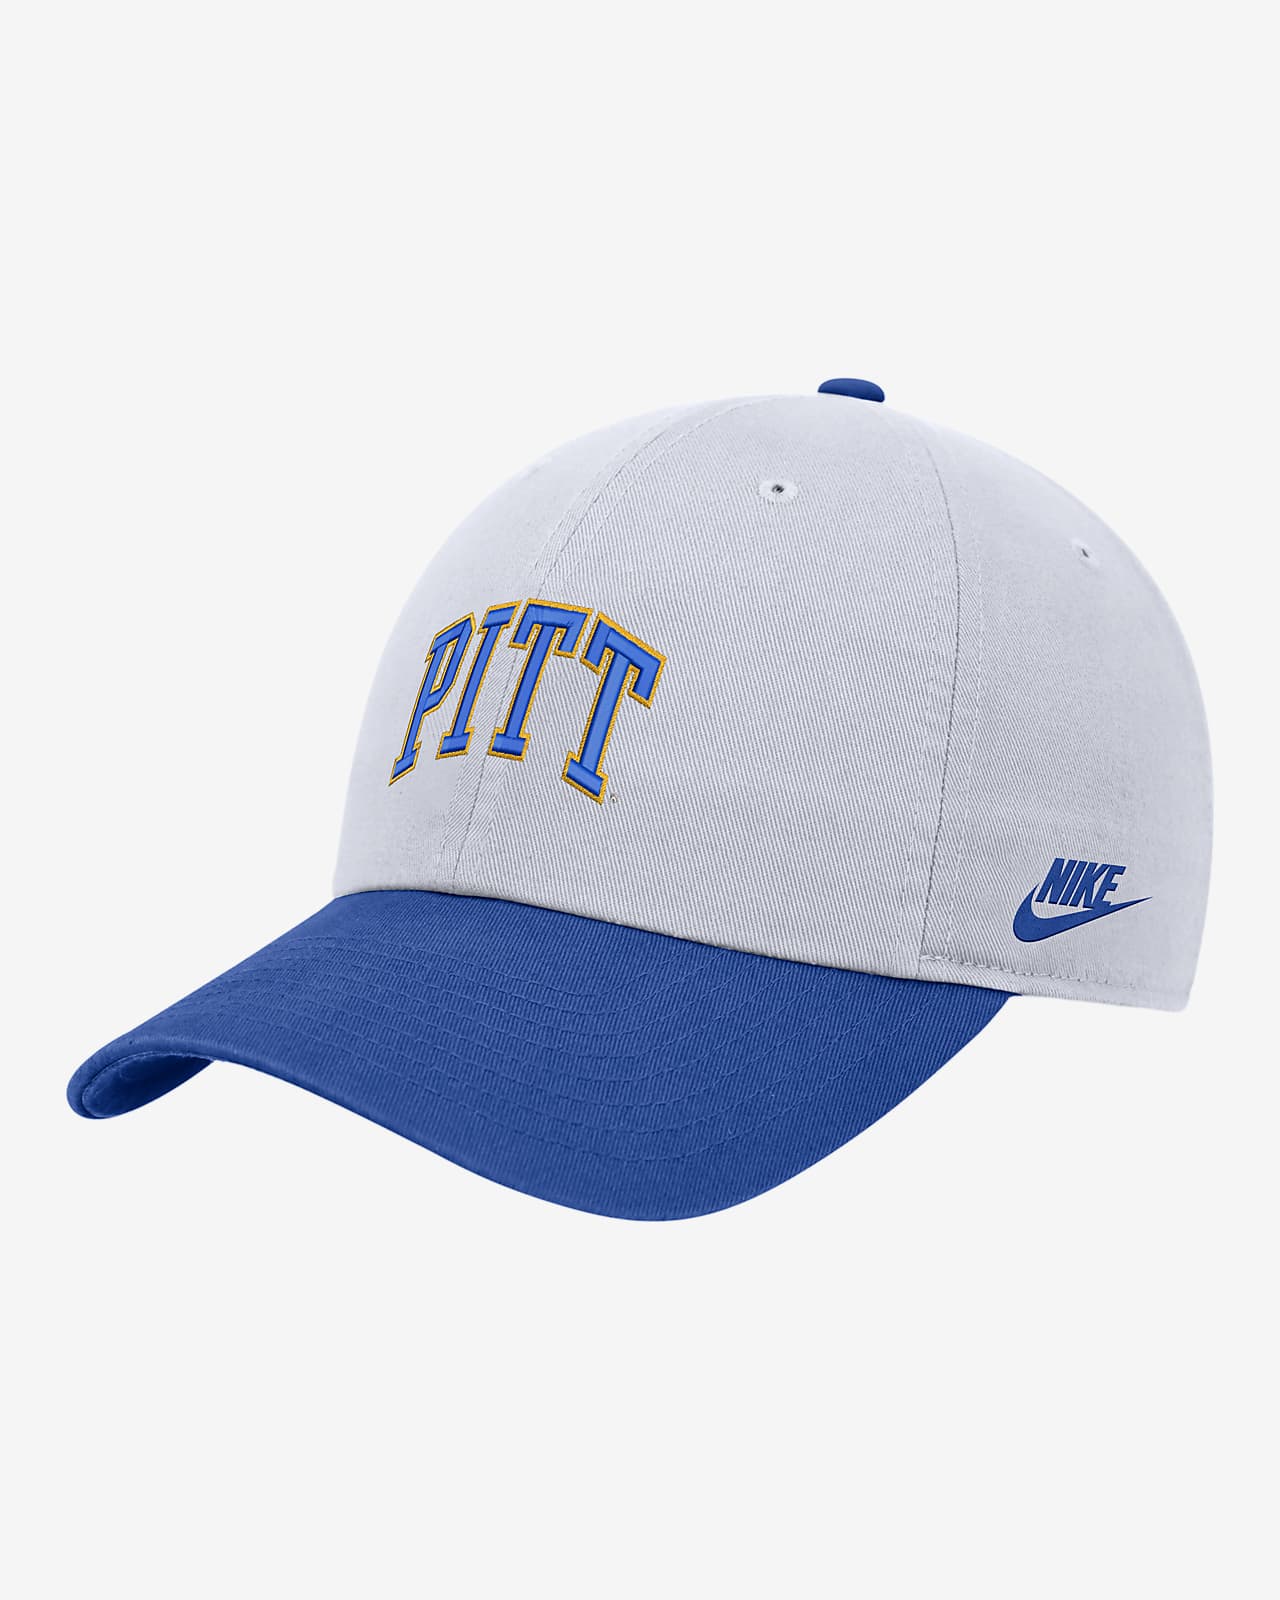 Gorra universitaria Nike Campus Pitt